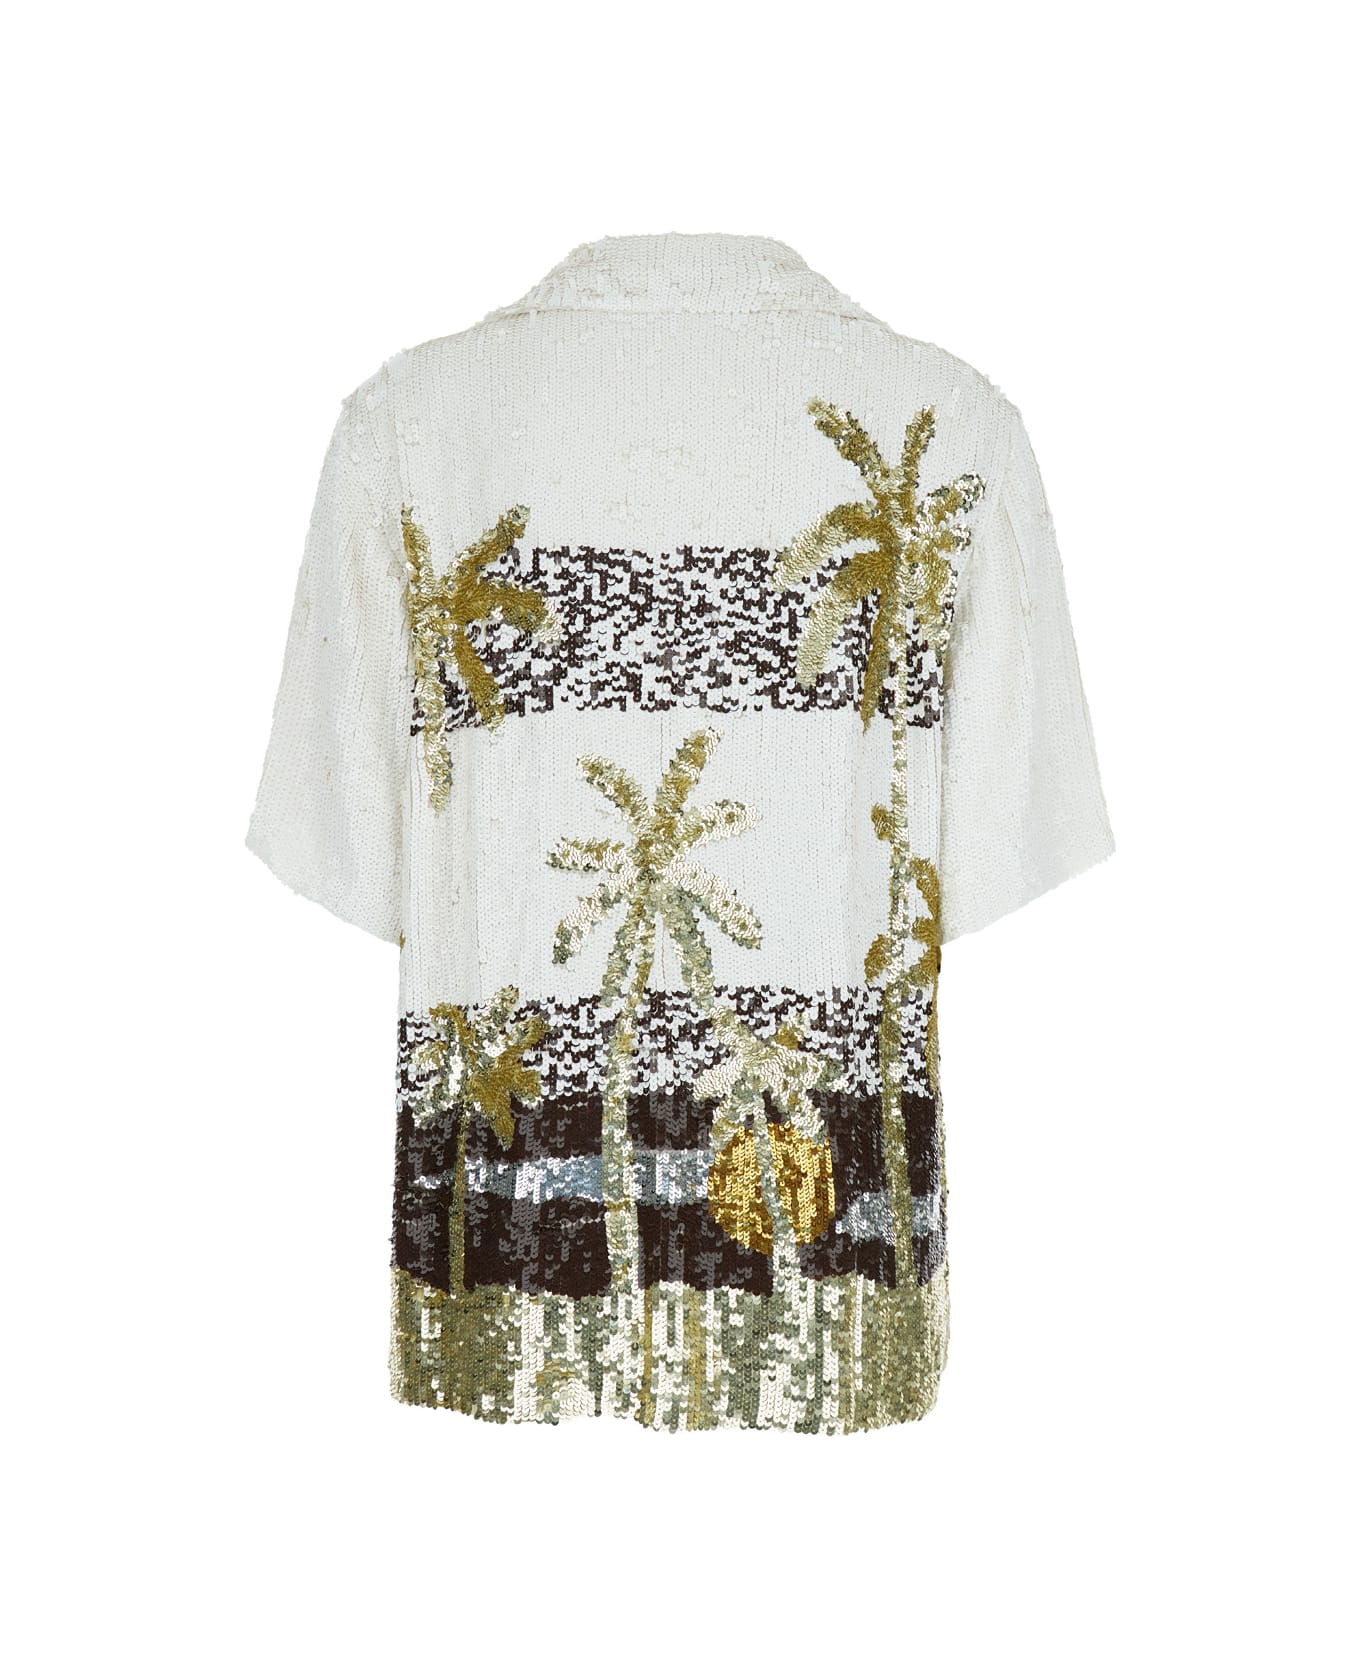 Parosh Blue Tropical Patterns Casual Style Short Sleeves Shirt - White Print シャツ